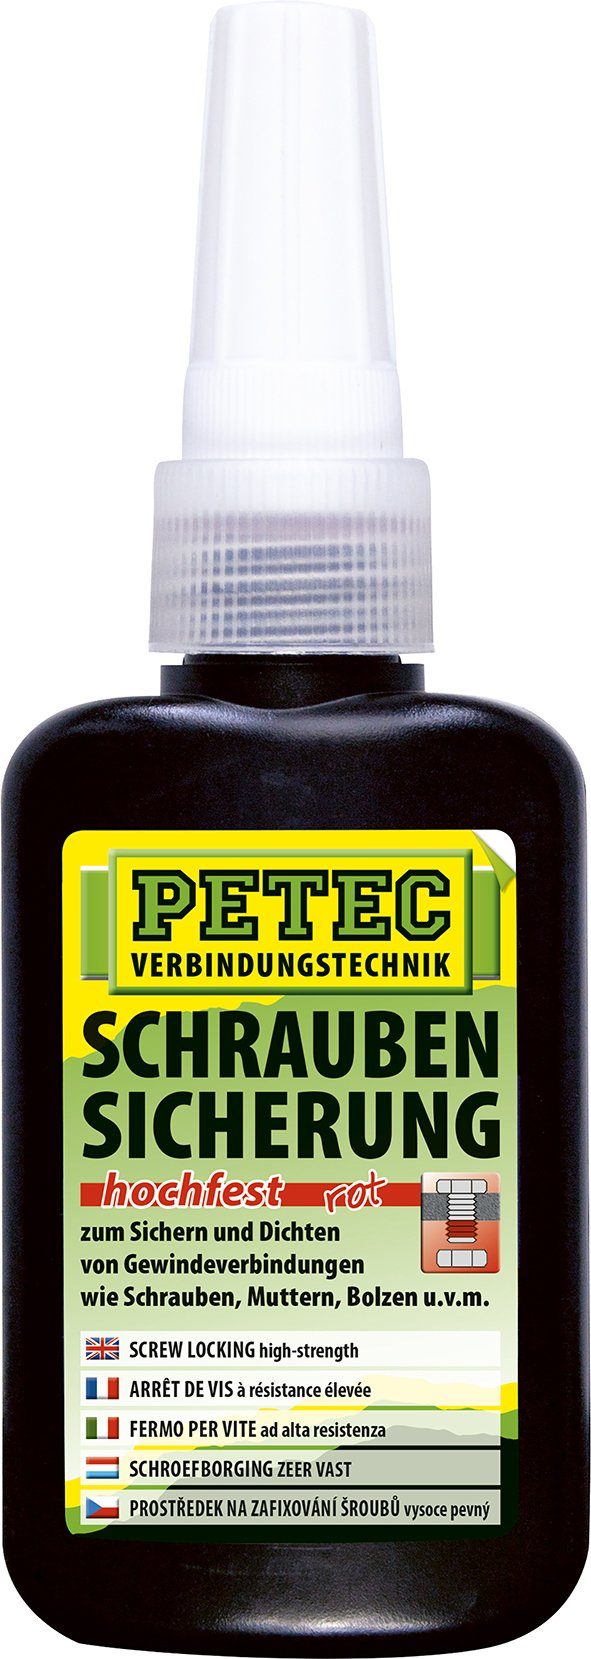 920250 250g rot Petec Schrauben-Set Petec Schraubensicherung